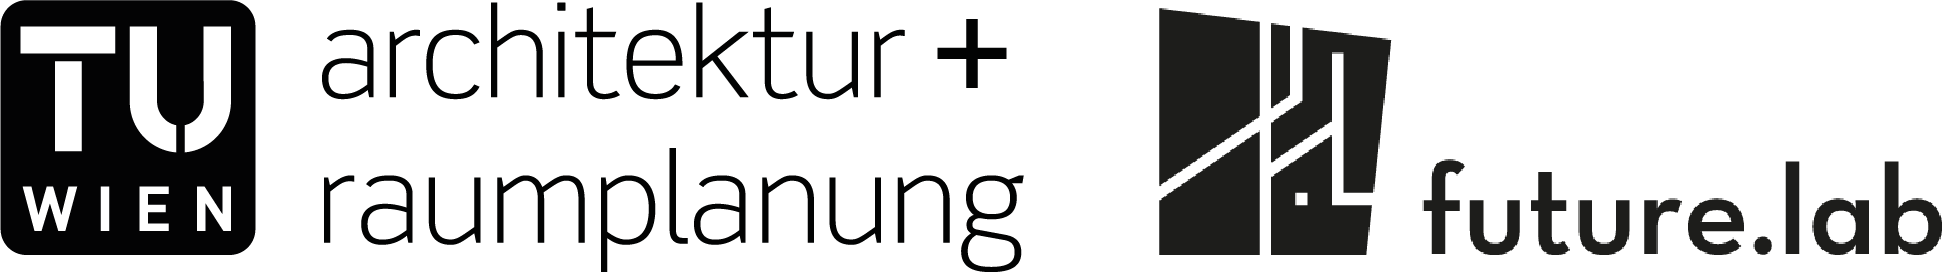 tuarch logo researchcenter futurelab